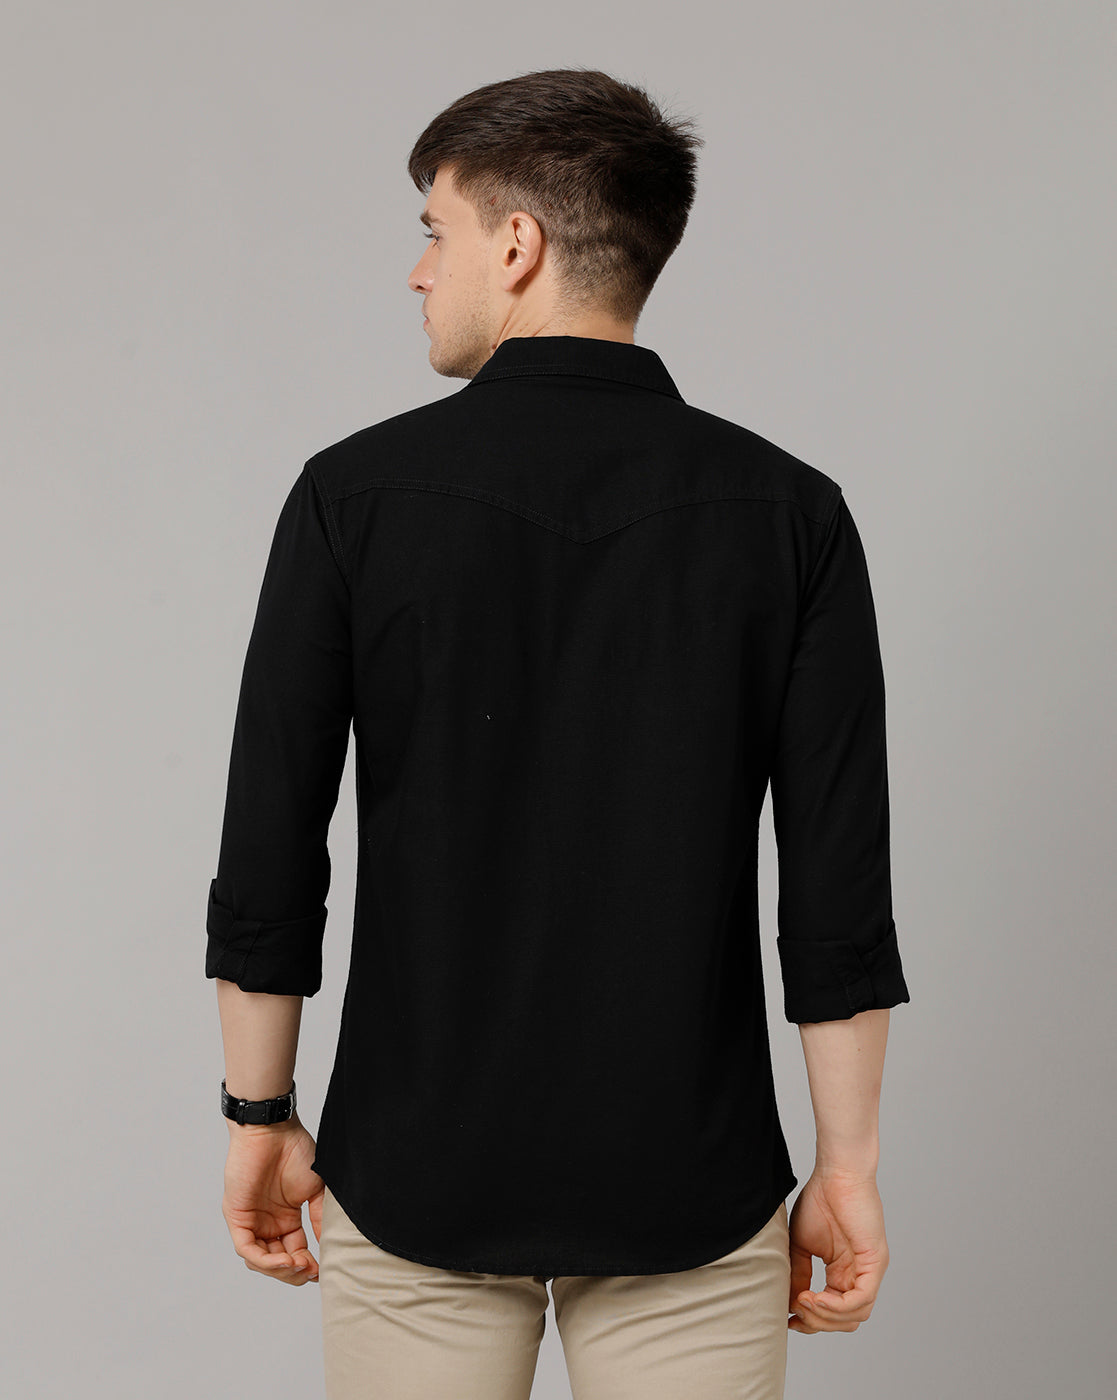 Black Casual Shirt